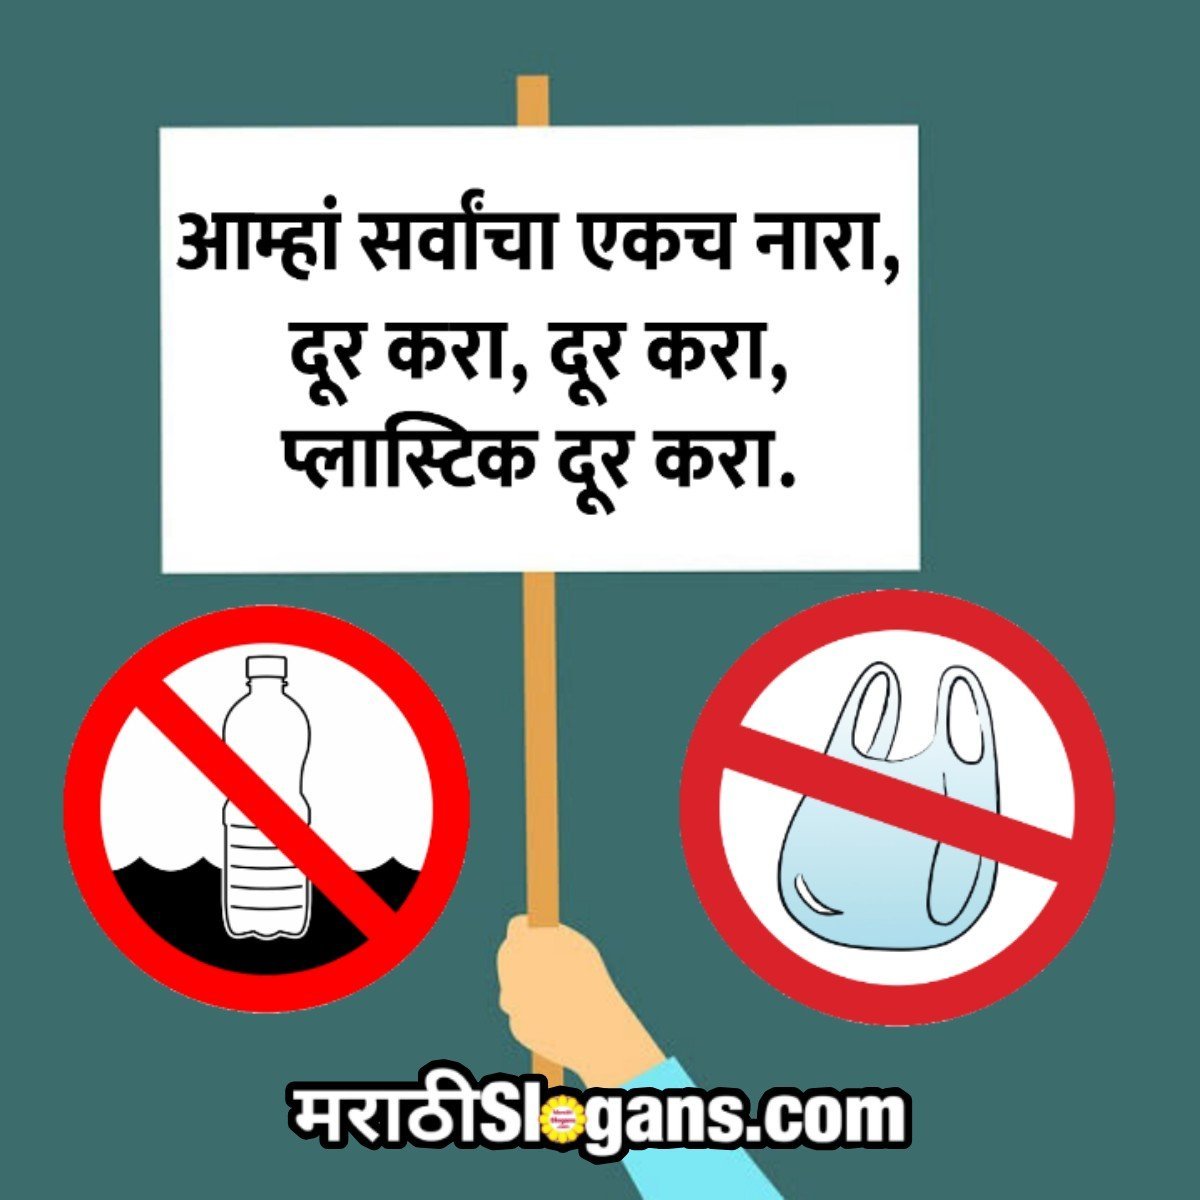 speech on pollution in marathi language